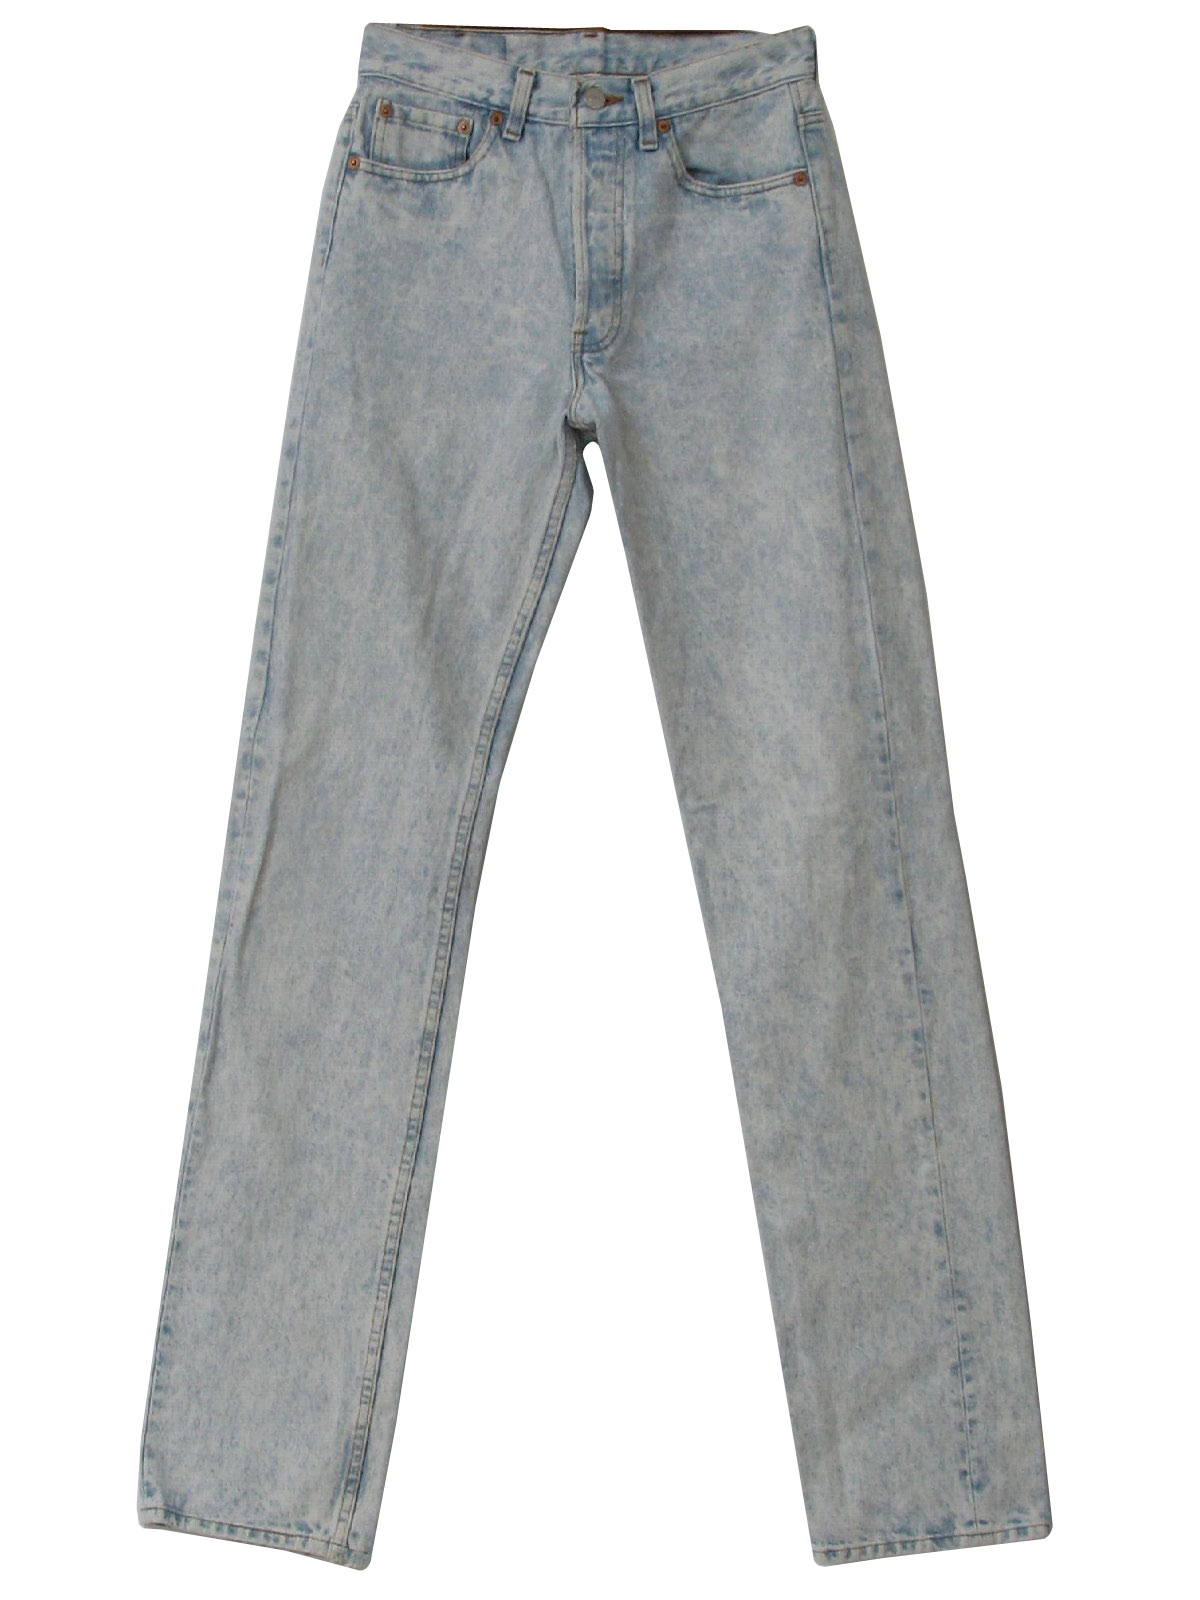 Levis 501 Eighties Vintage Pants: 80s -Levis 501- Mens light blue acid ...